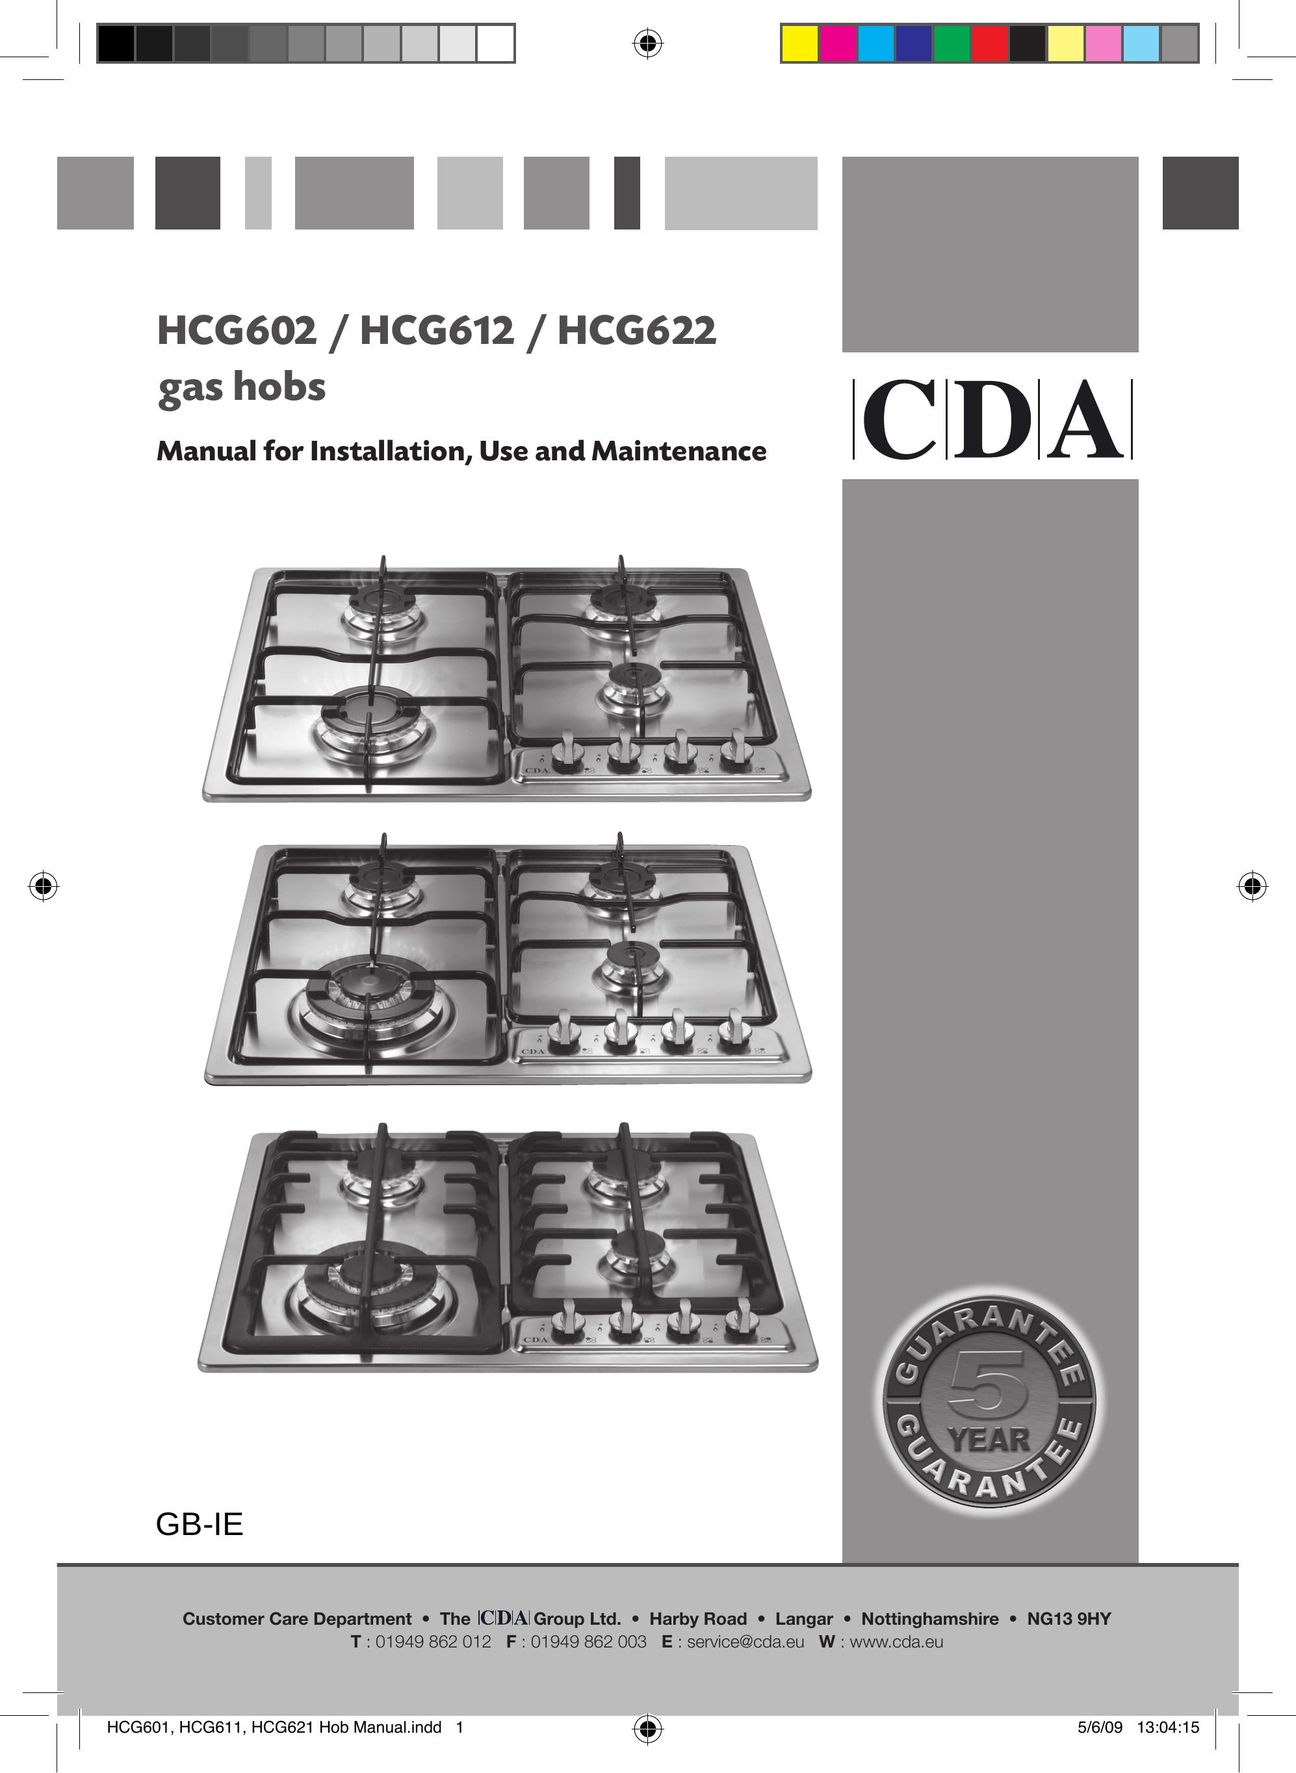 CDA HCG622 Stove User Manual